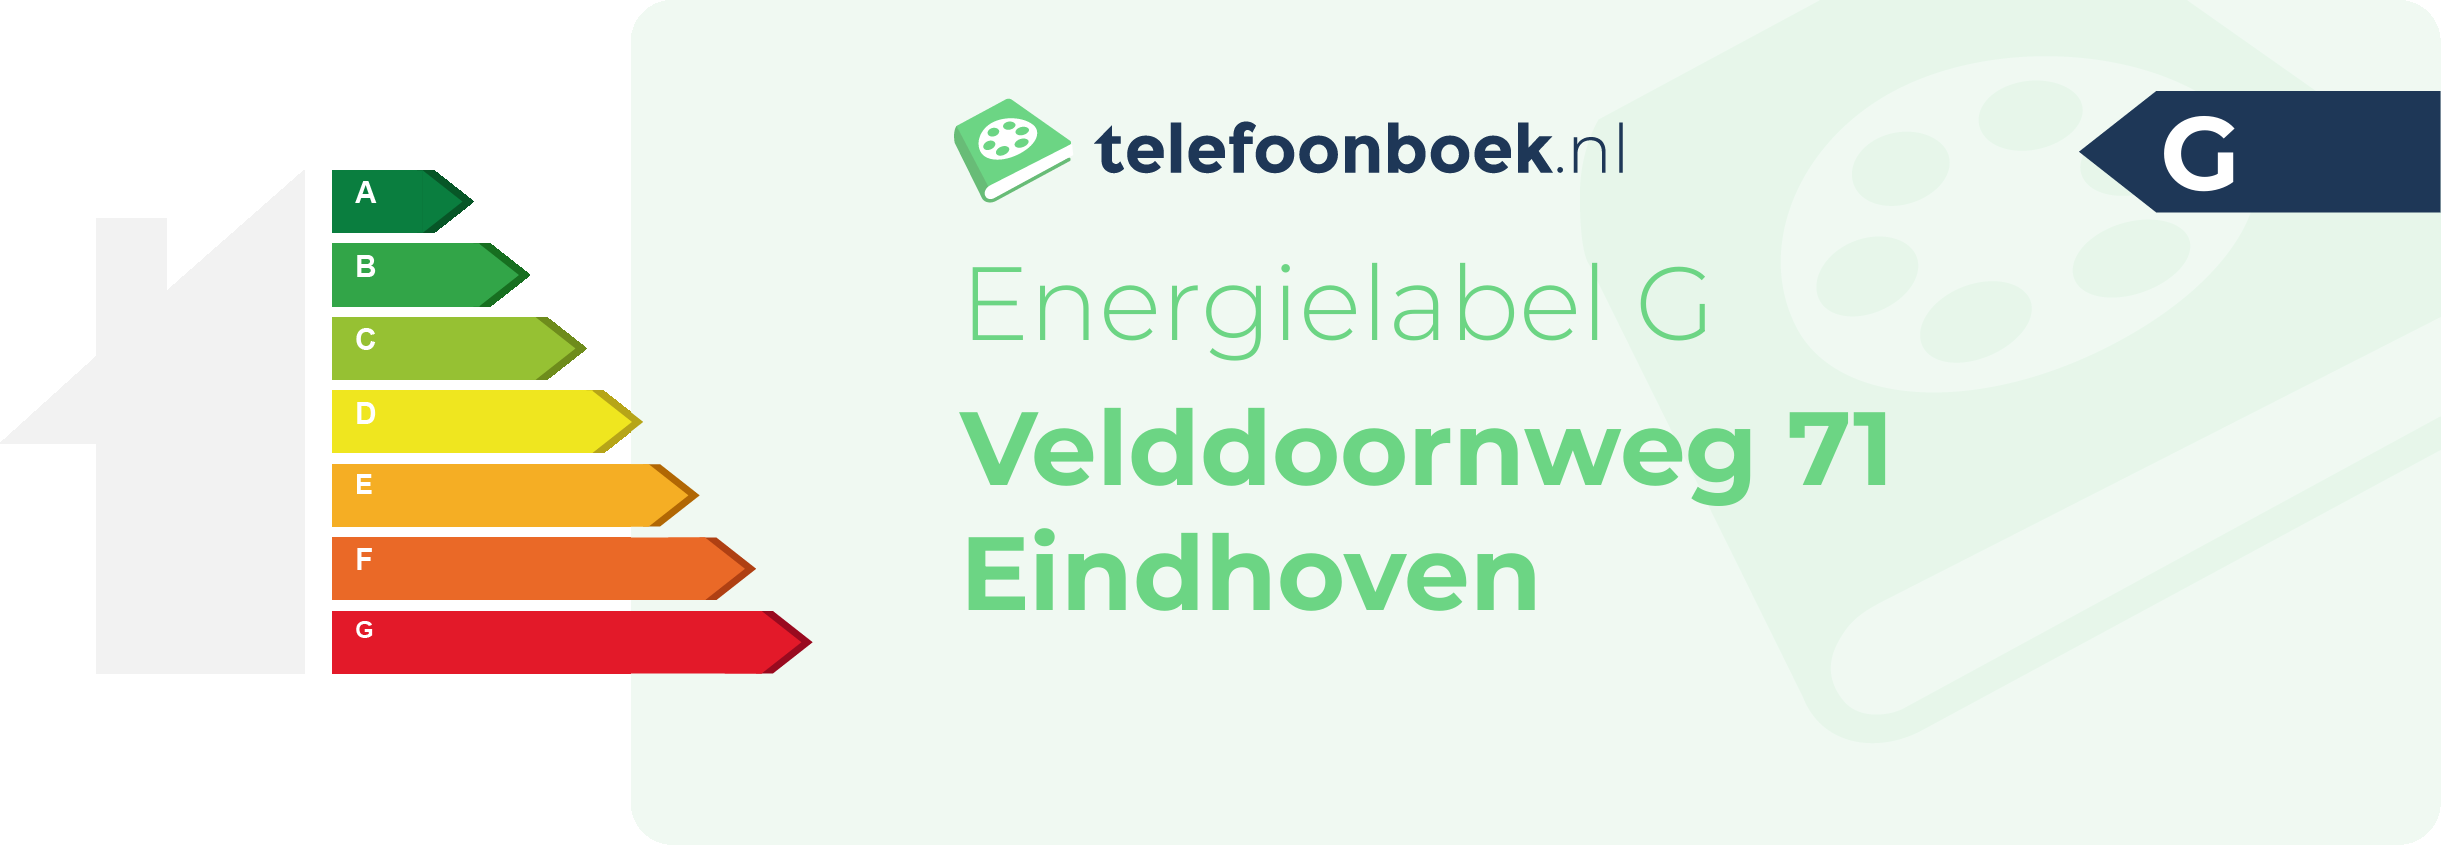 Energielabel Velddoornweg 71 Eindhoven